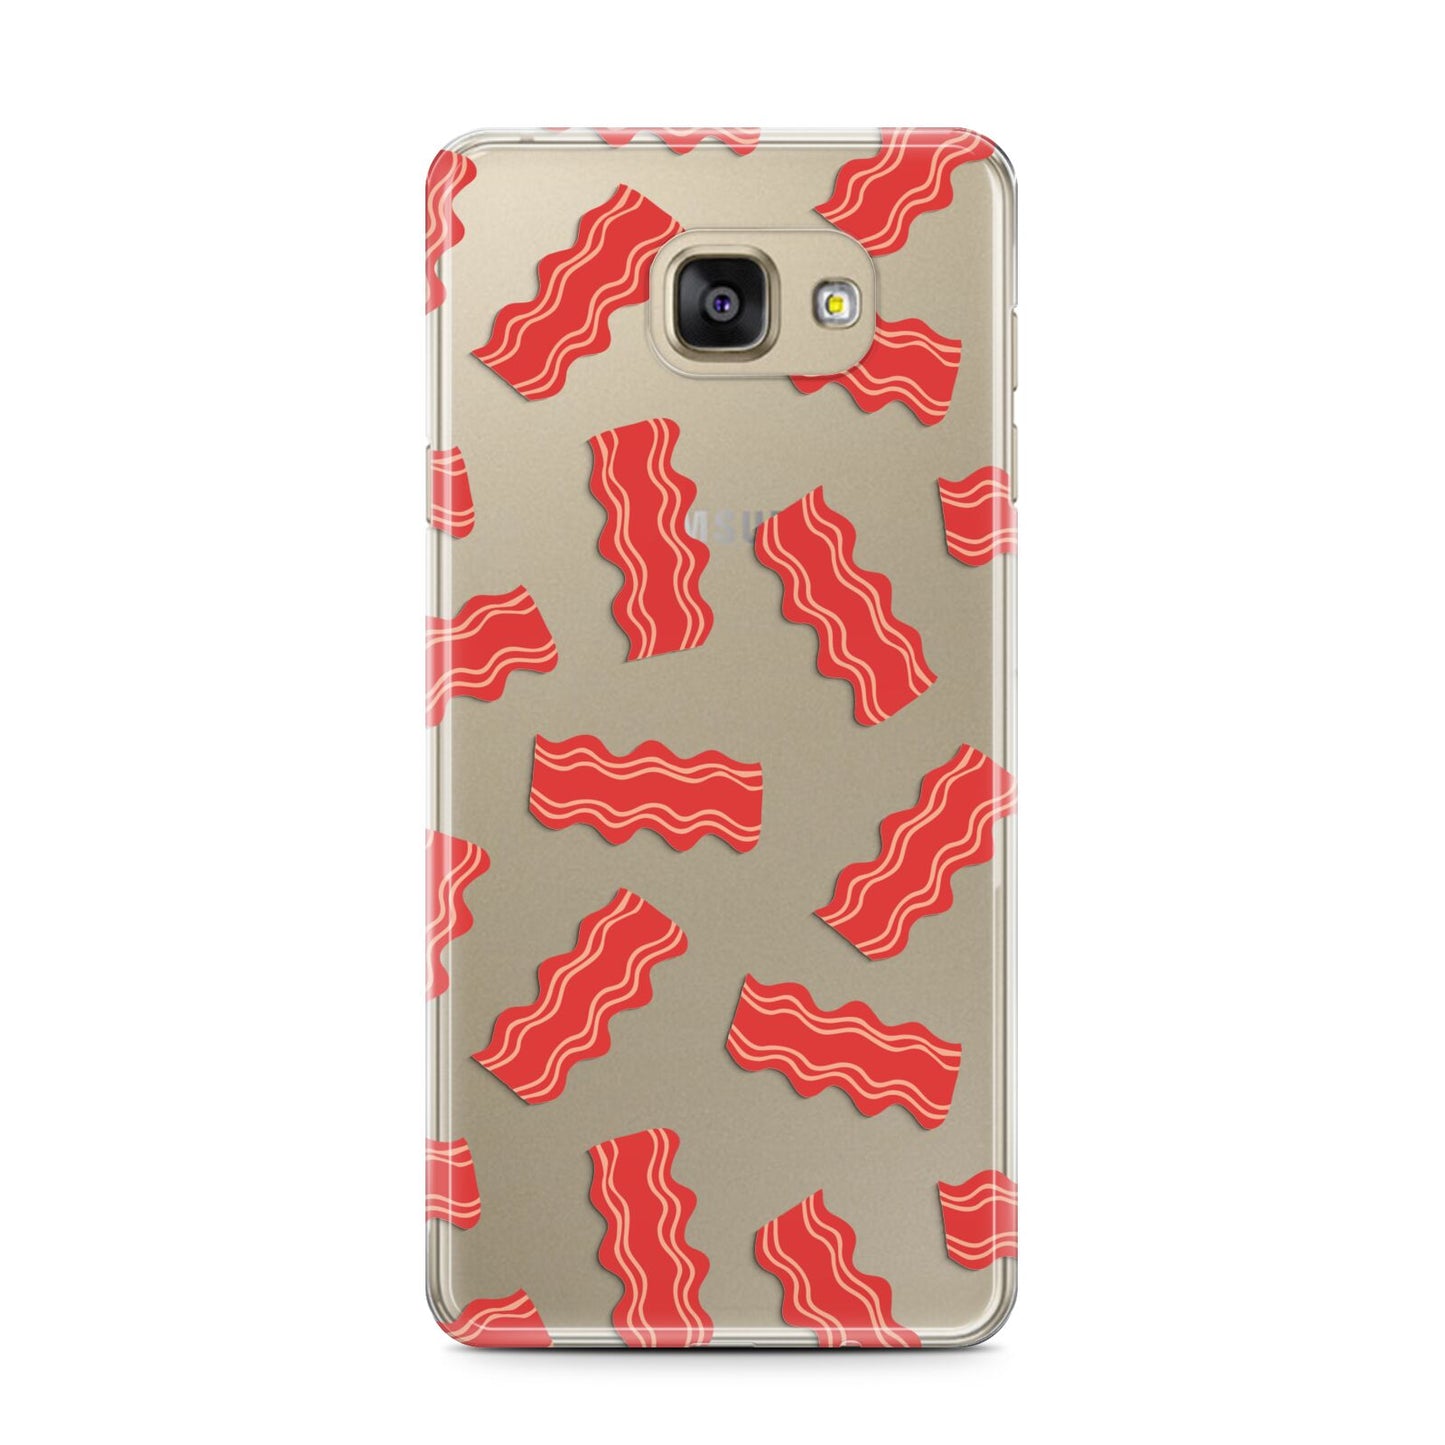 Bacon Samsung Galaxy A7 2016 Case on gold phone